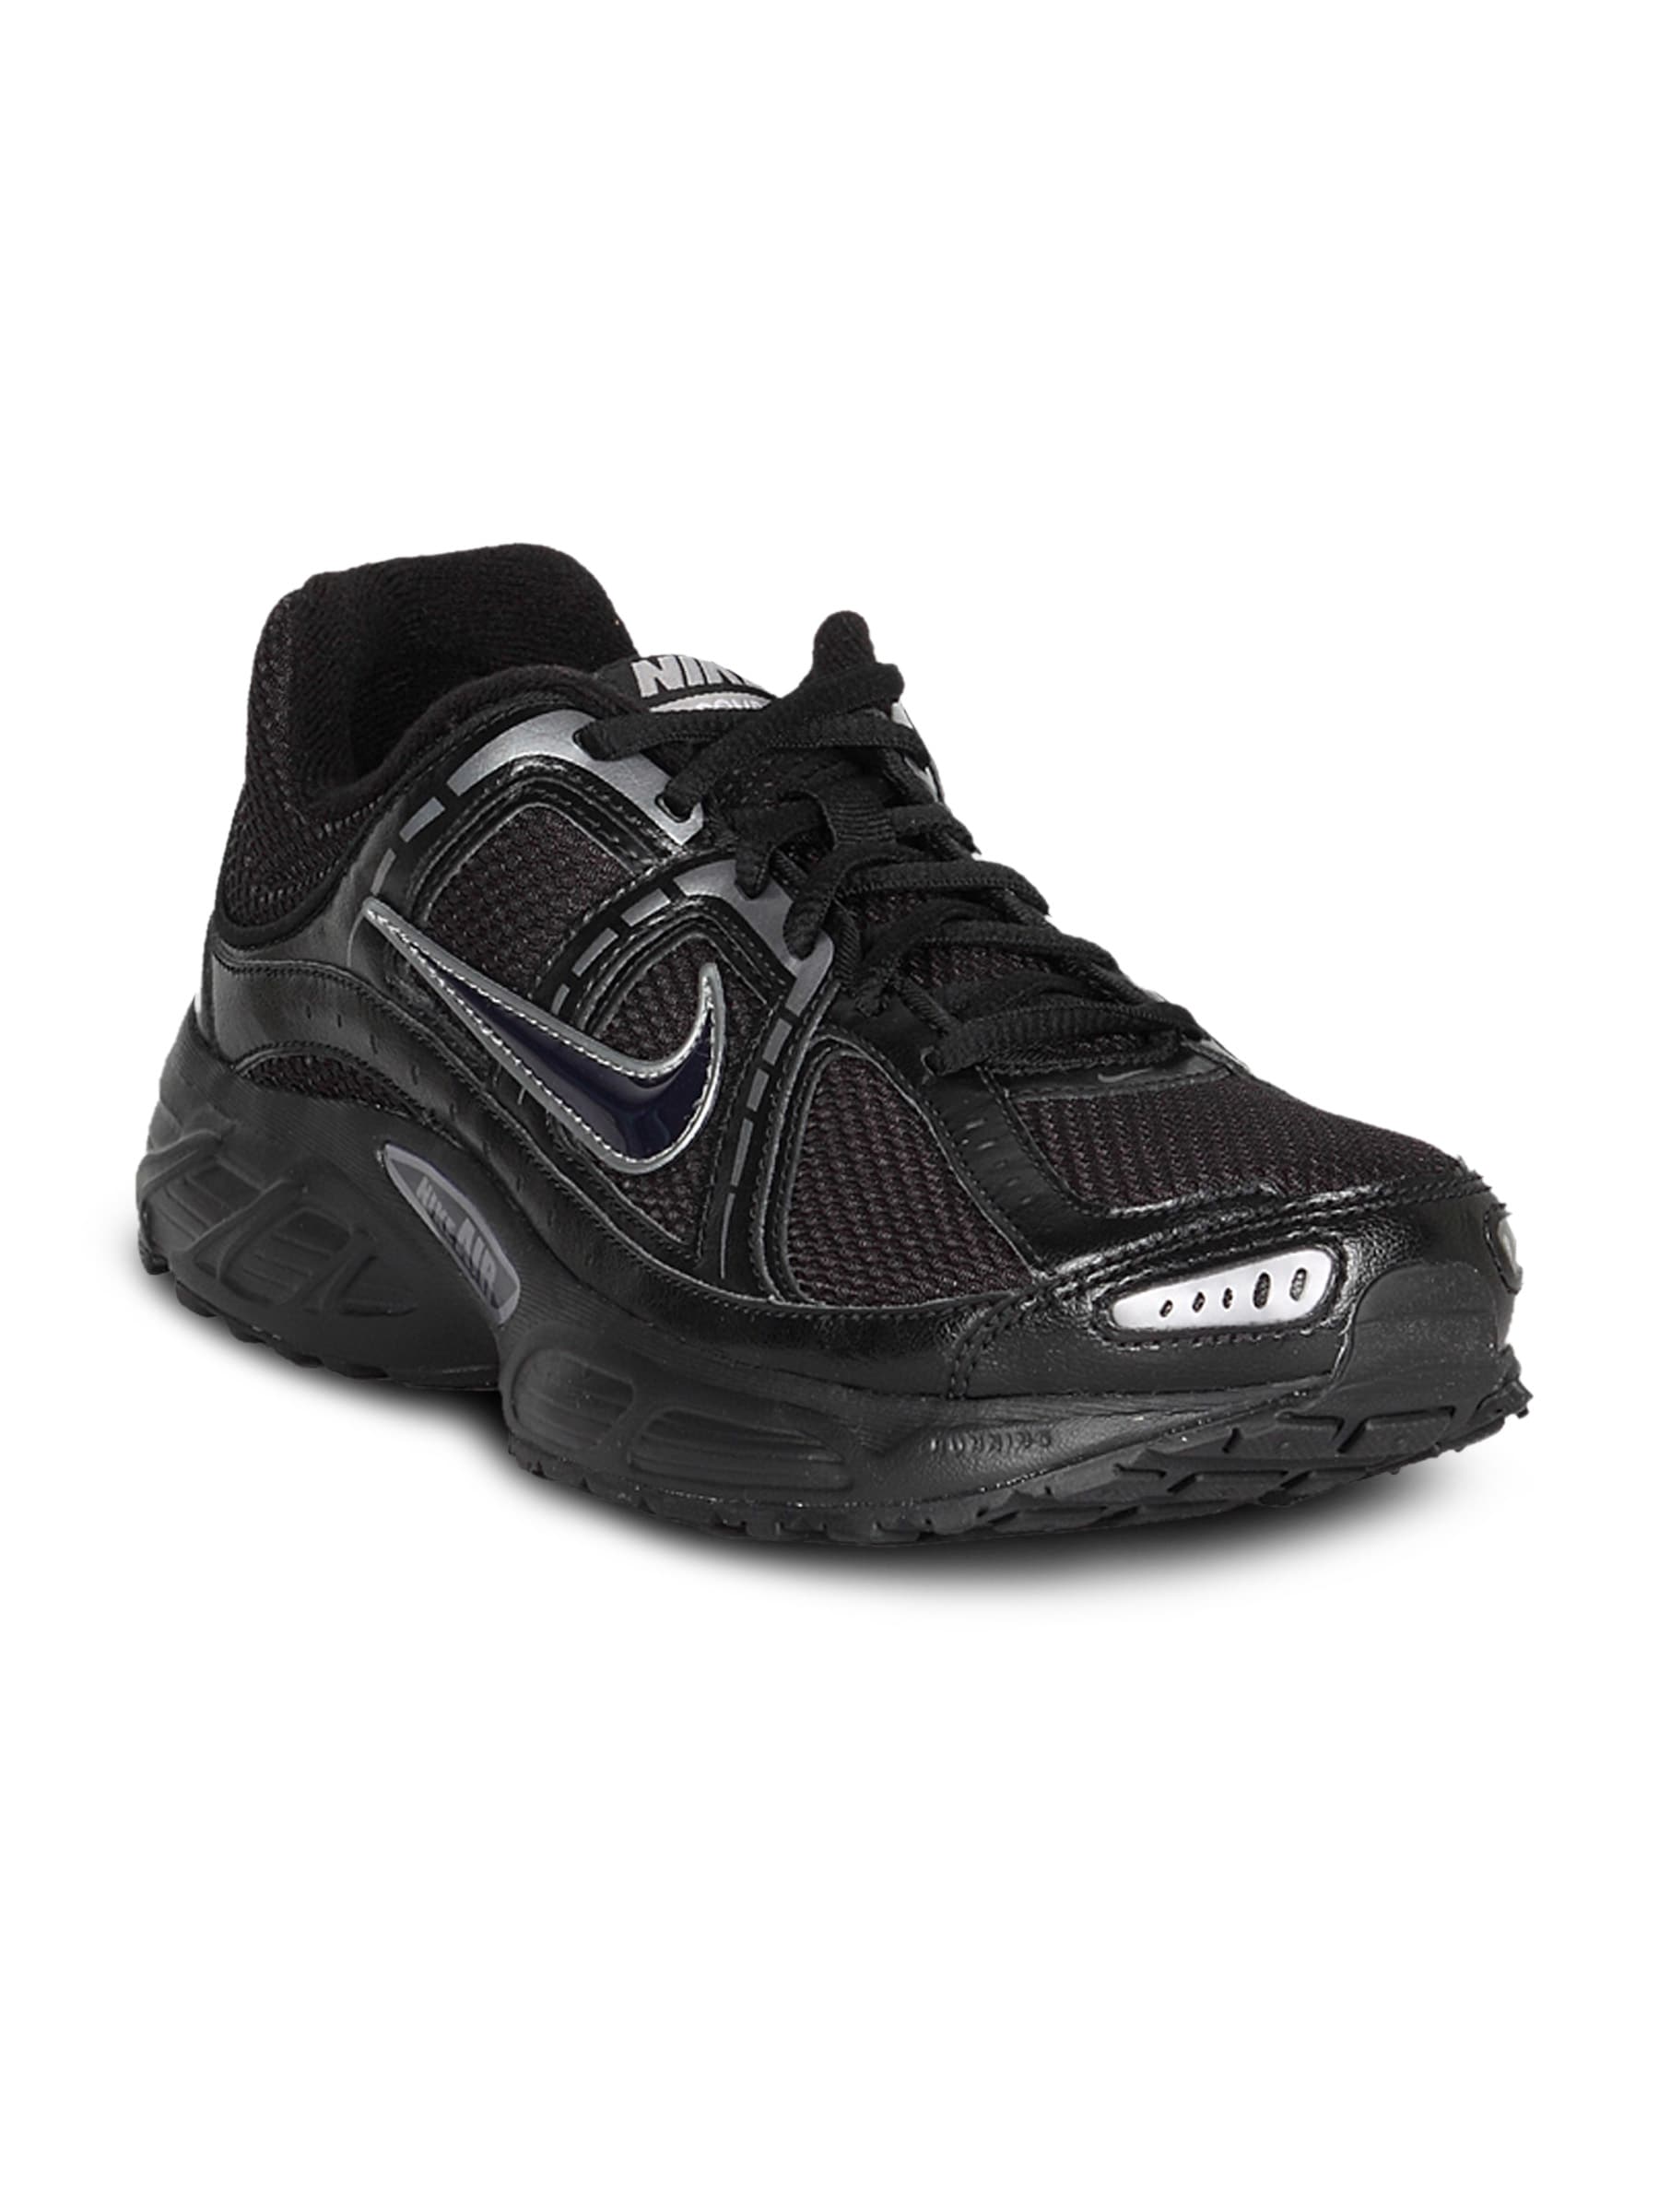 Nike Men's Air Compete Black Shoe